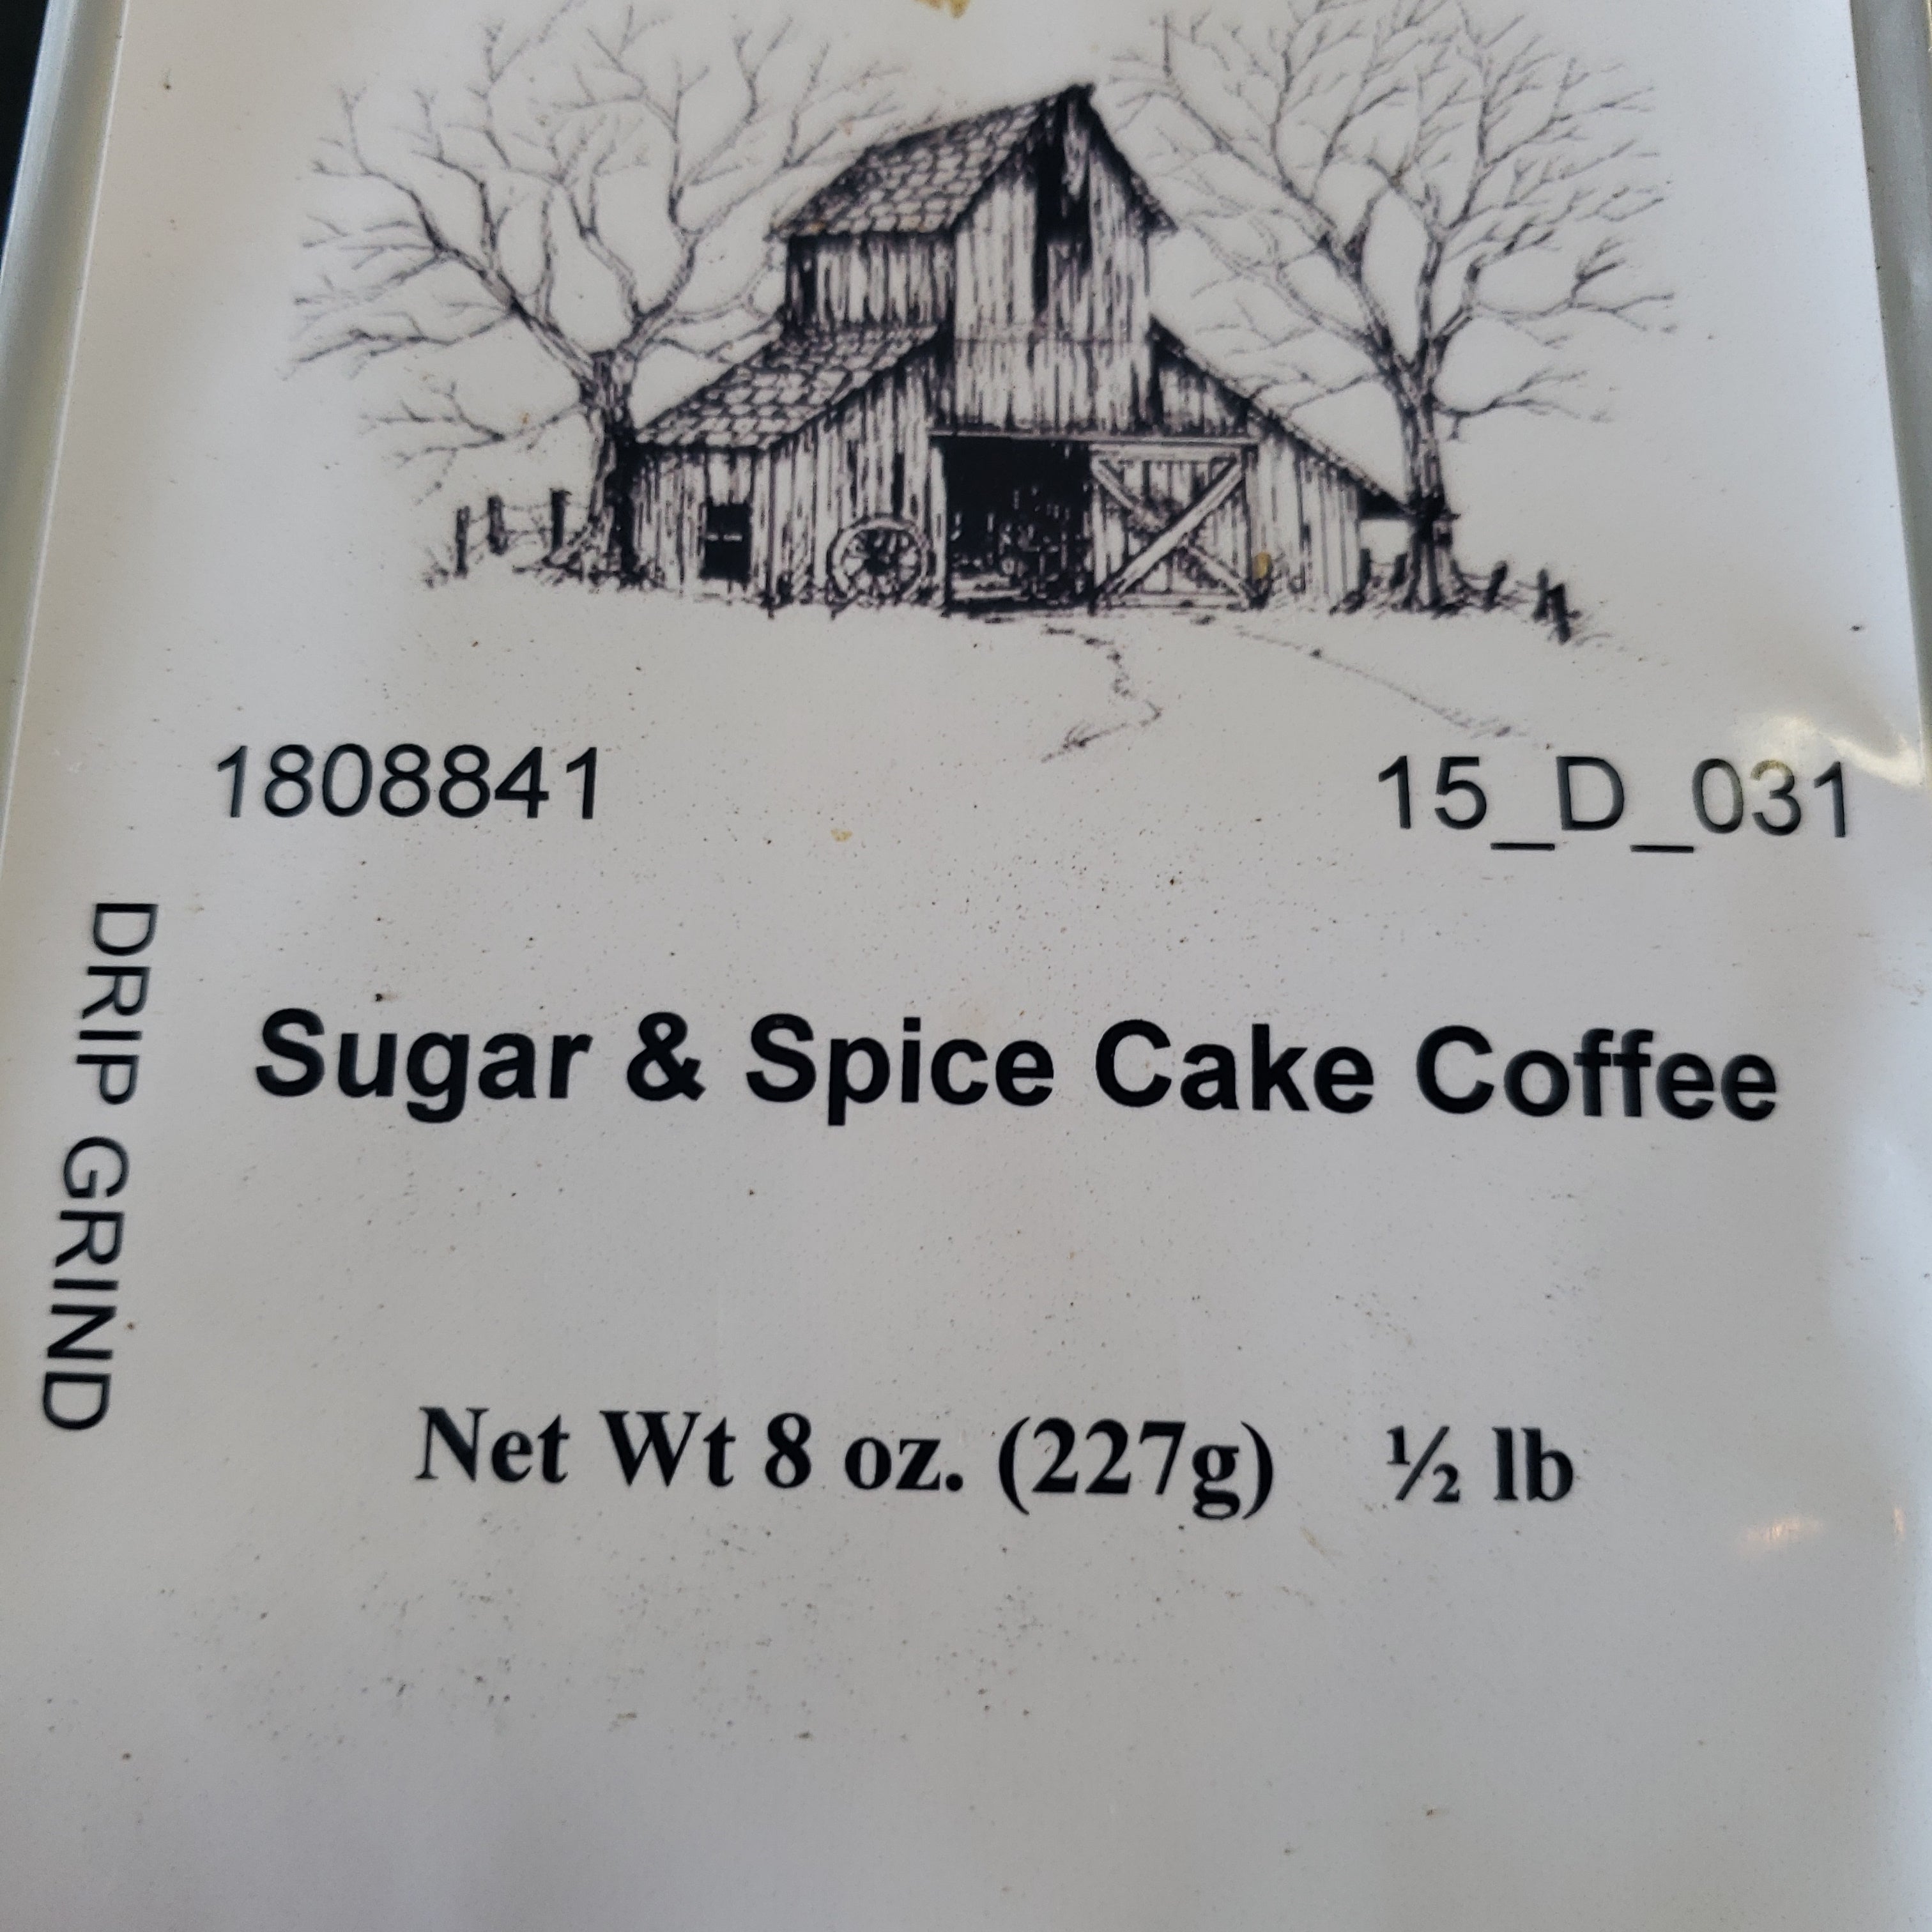 Sugar and spice cake coffee